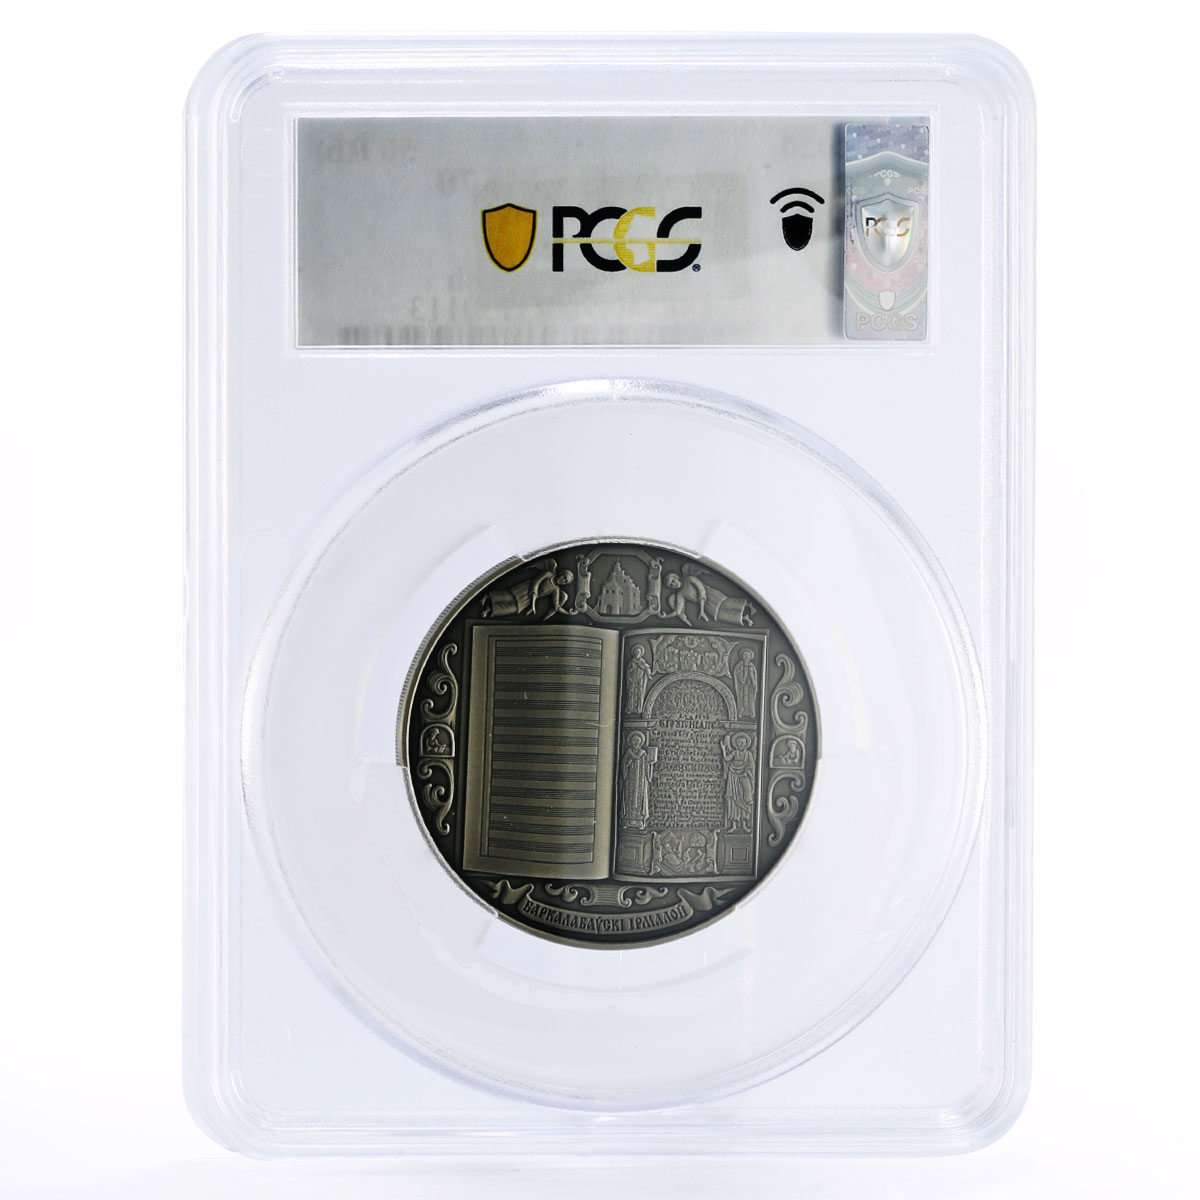 Belarus 50 rubles Spiritual Heritage Irmologion Faith MS70 PCGS silver coin 2020